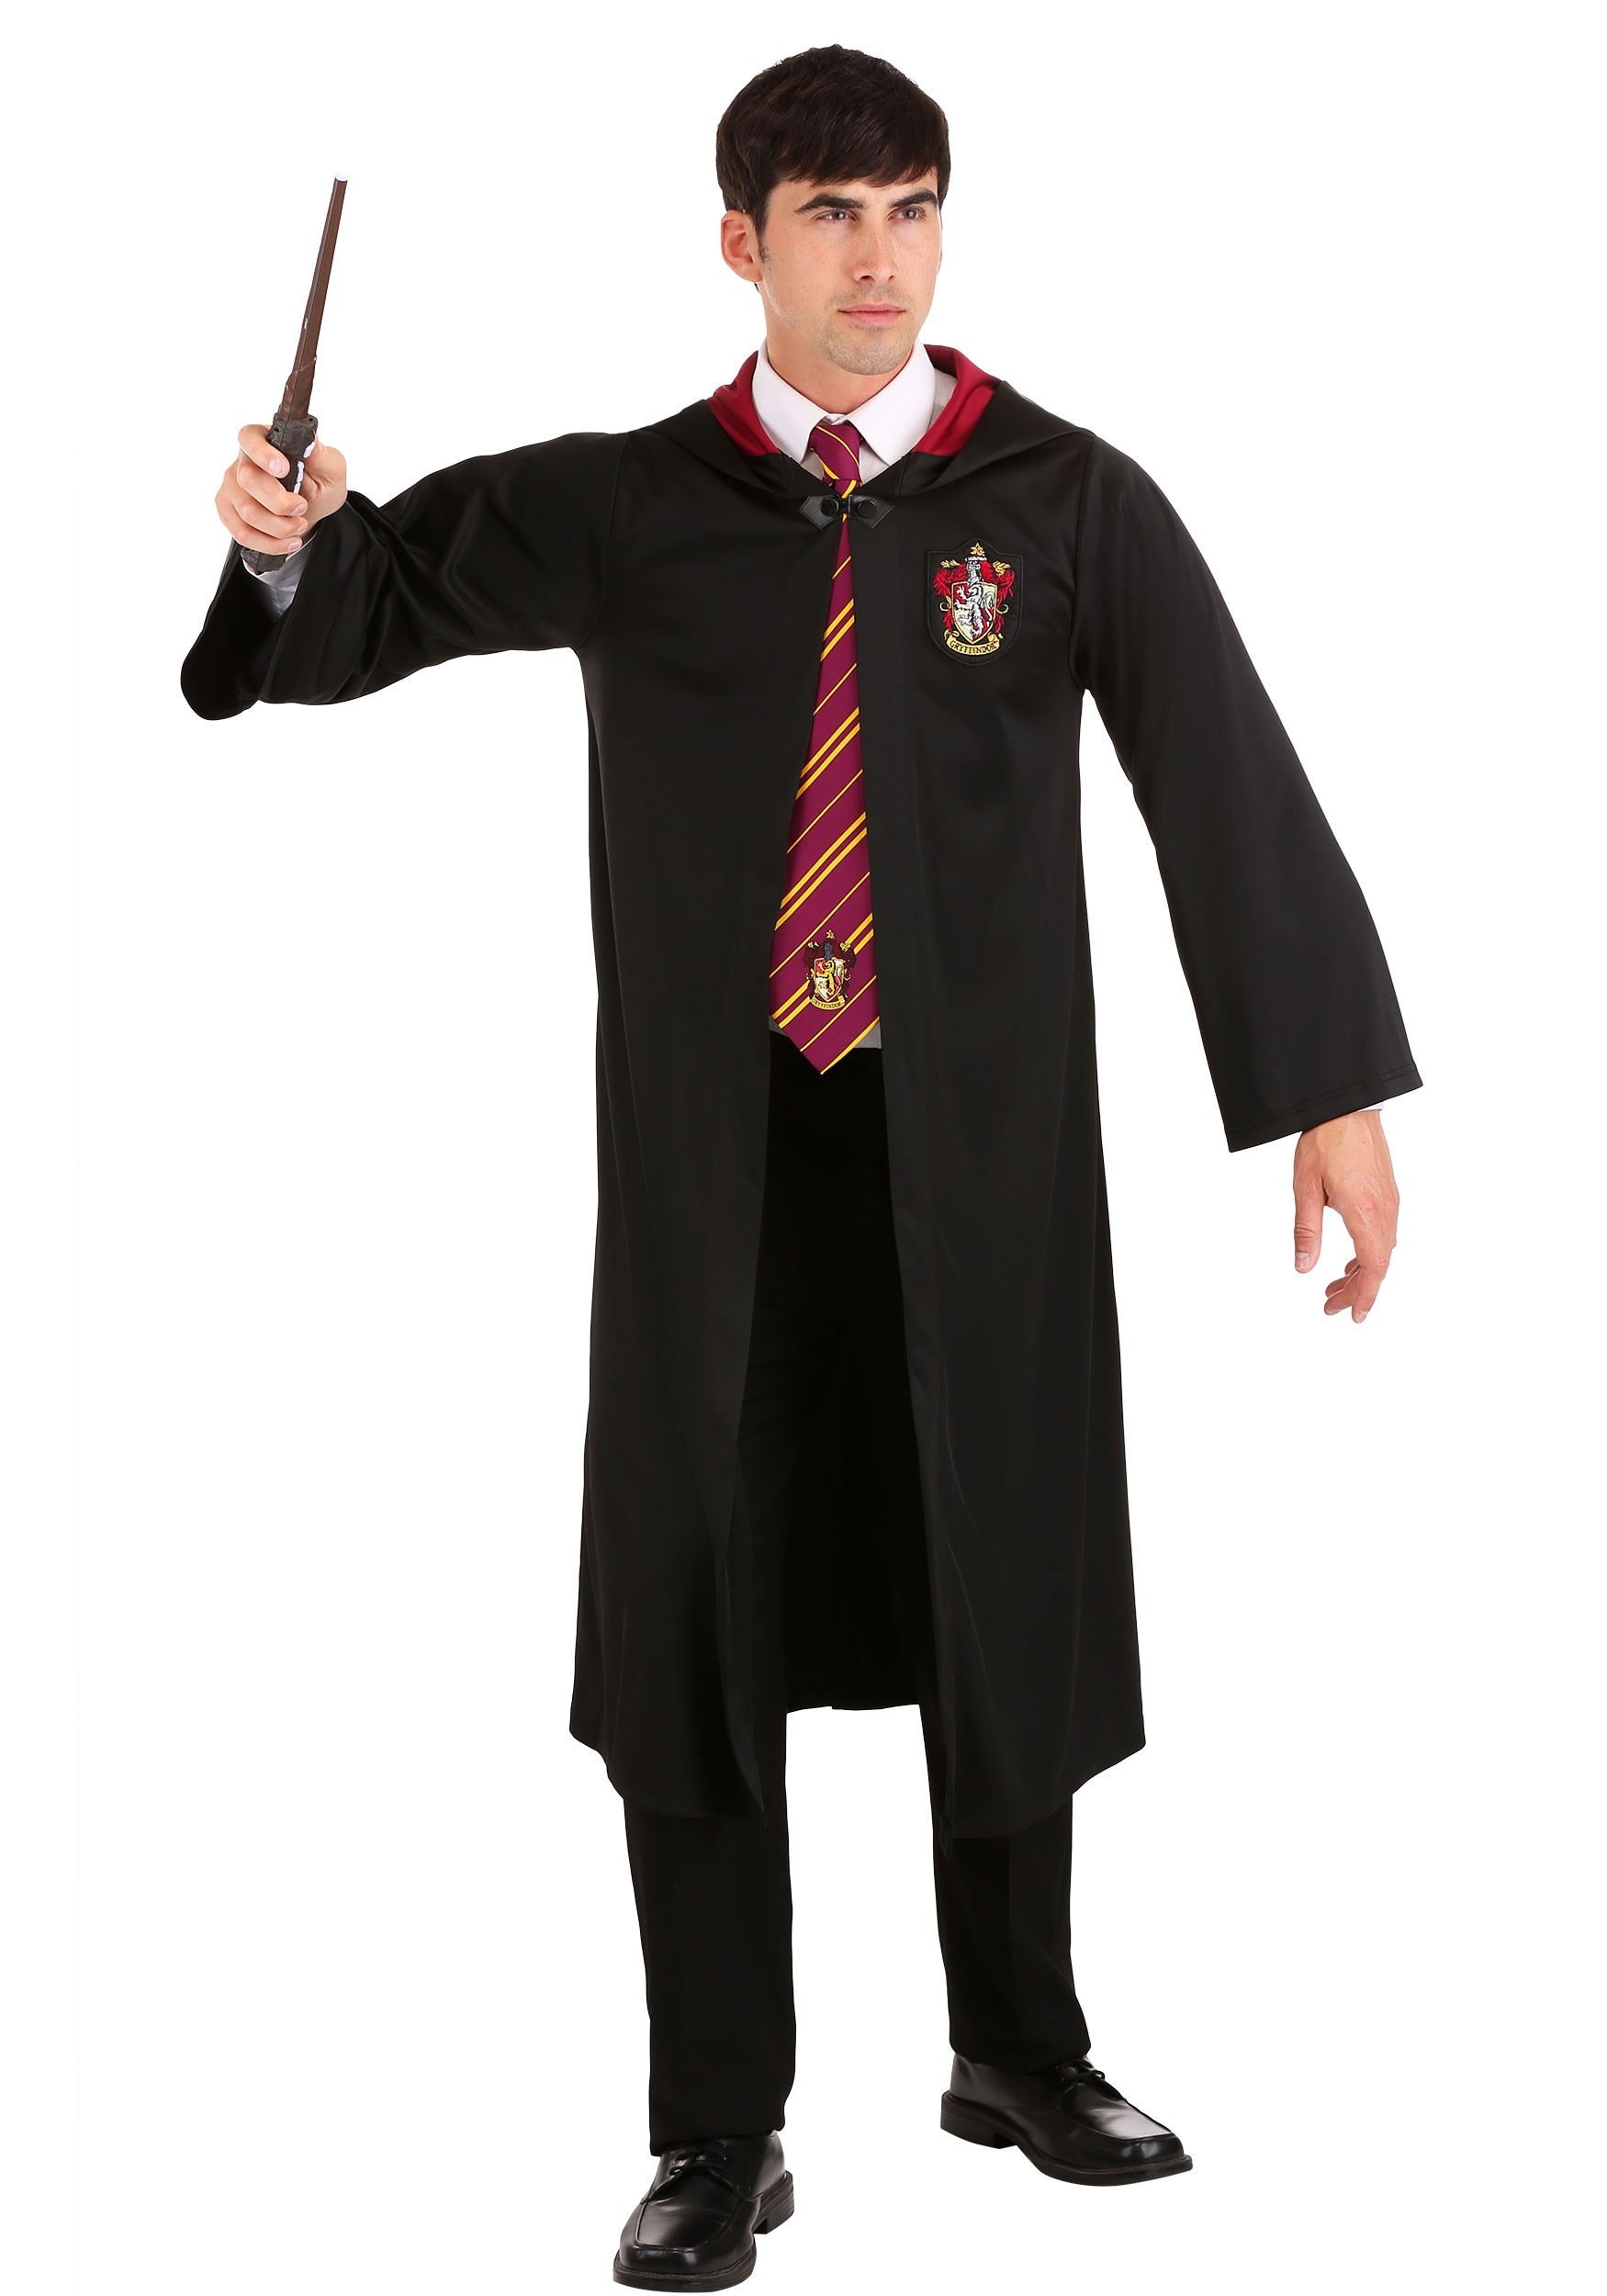 Productivo Villano flauta Harry Potter Gryffindor Robe Costume for Adults